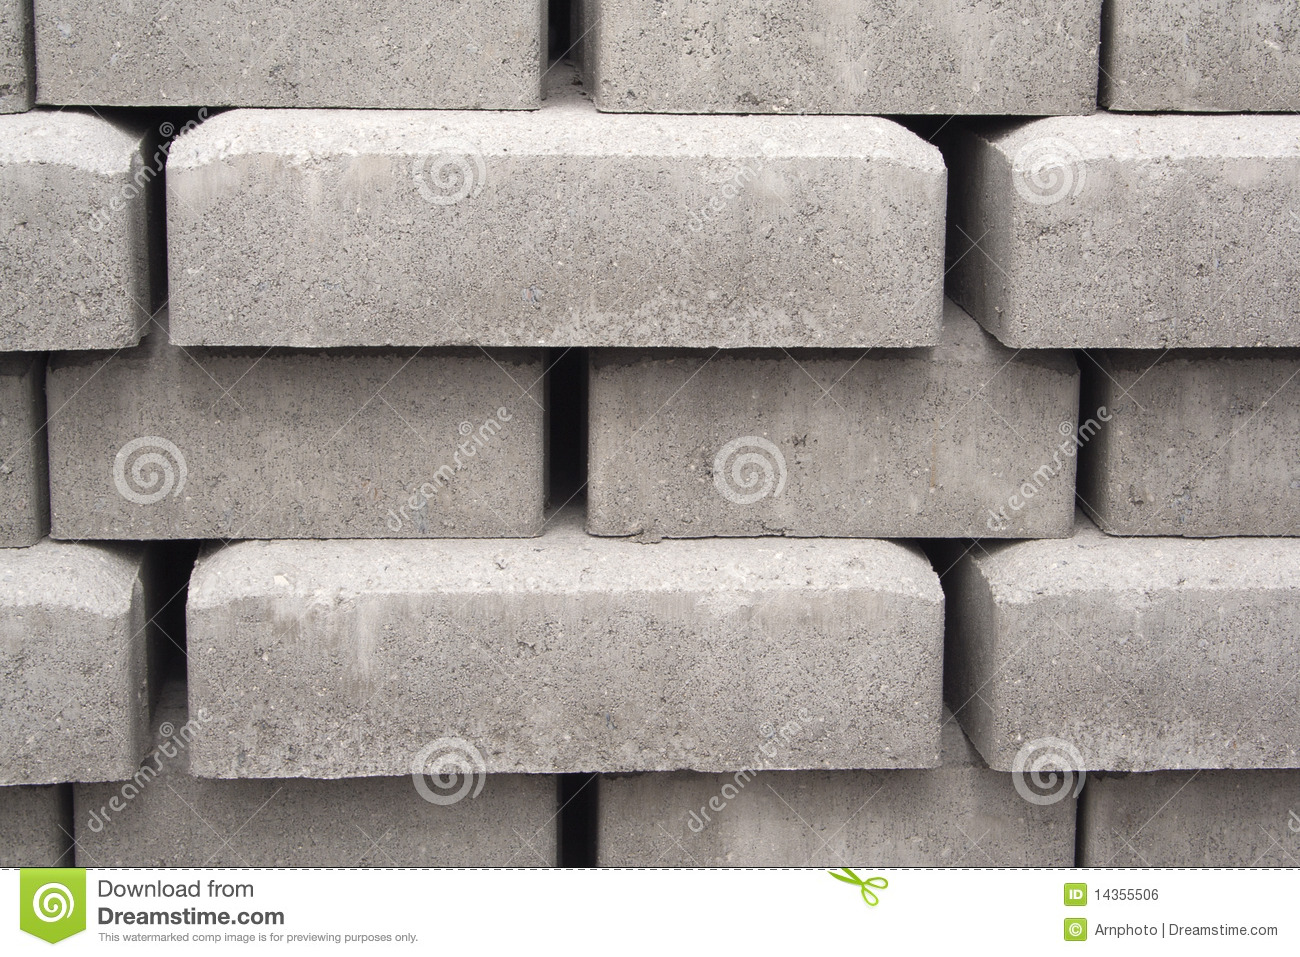 Concrete Bricks Royalty Free Stock Image   Image  14355506